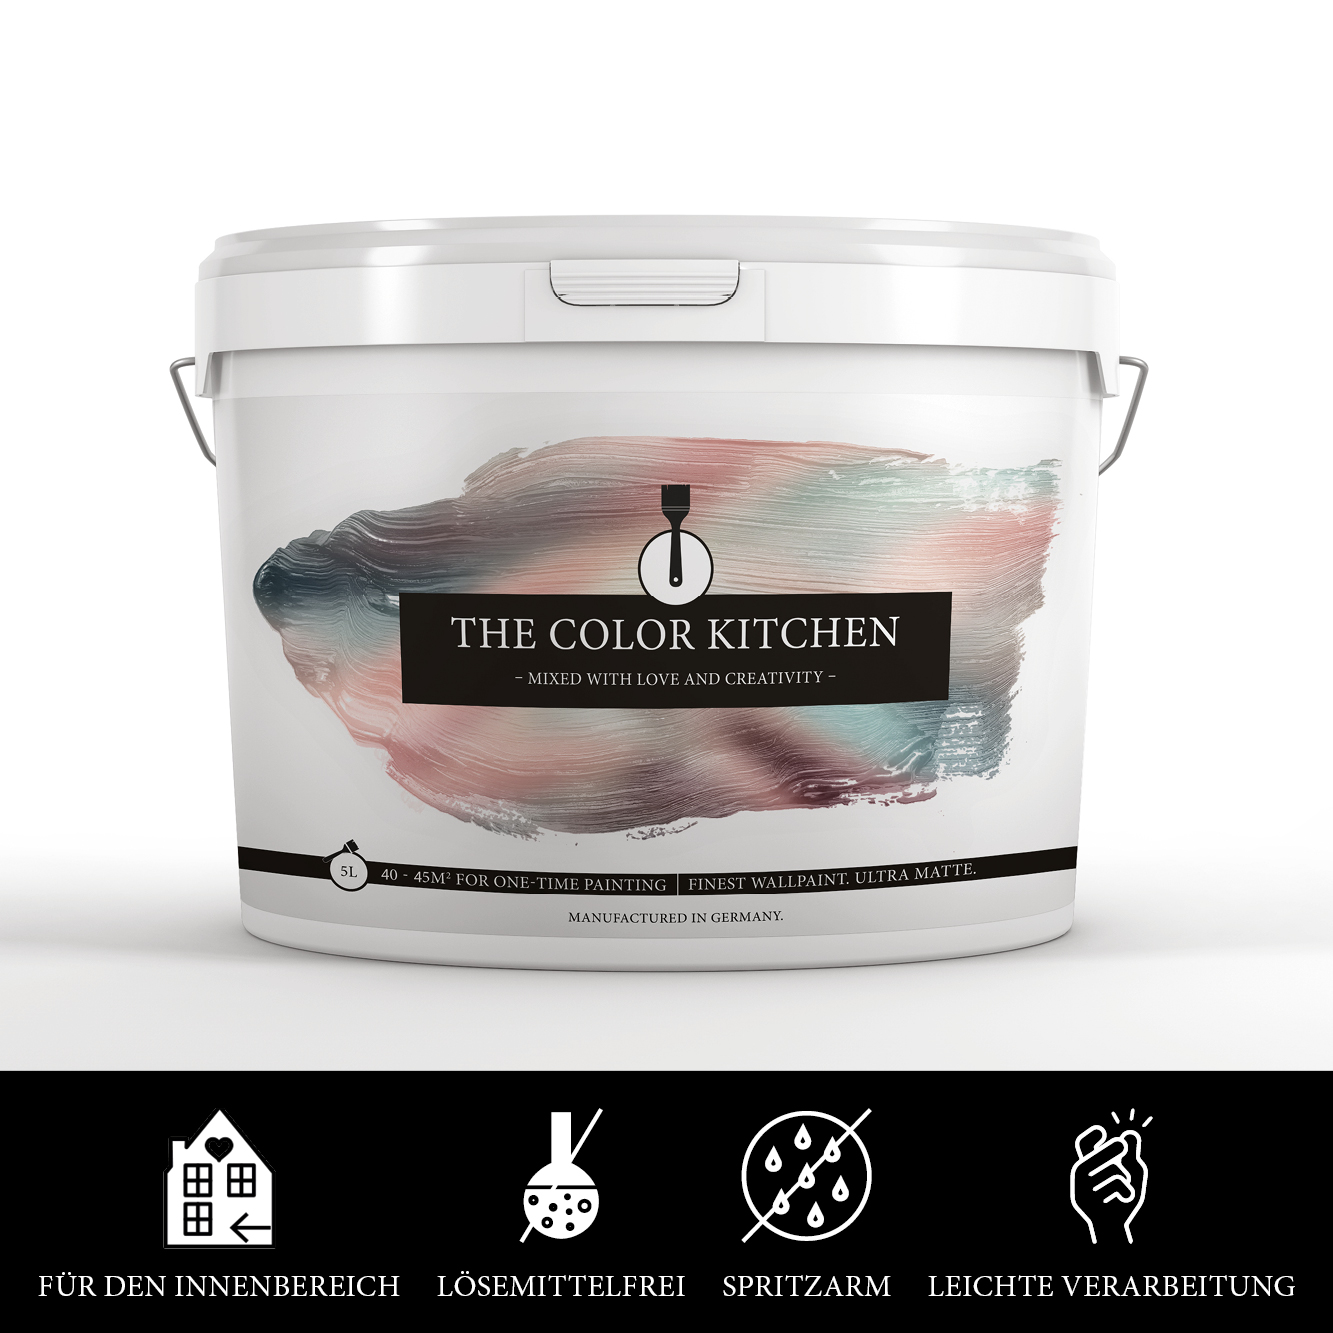 The Color Kitchen Kitchy Kiwi 5 l